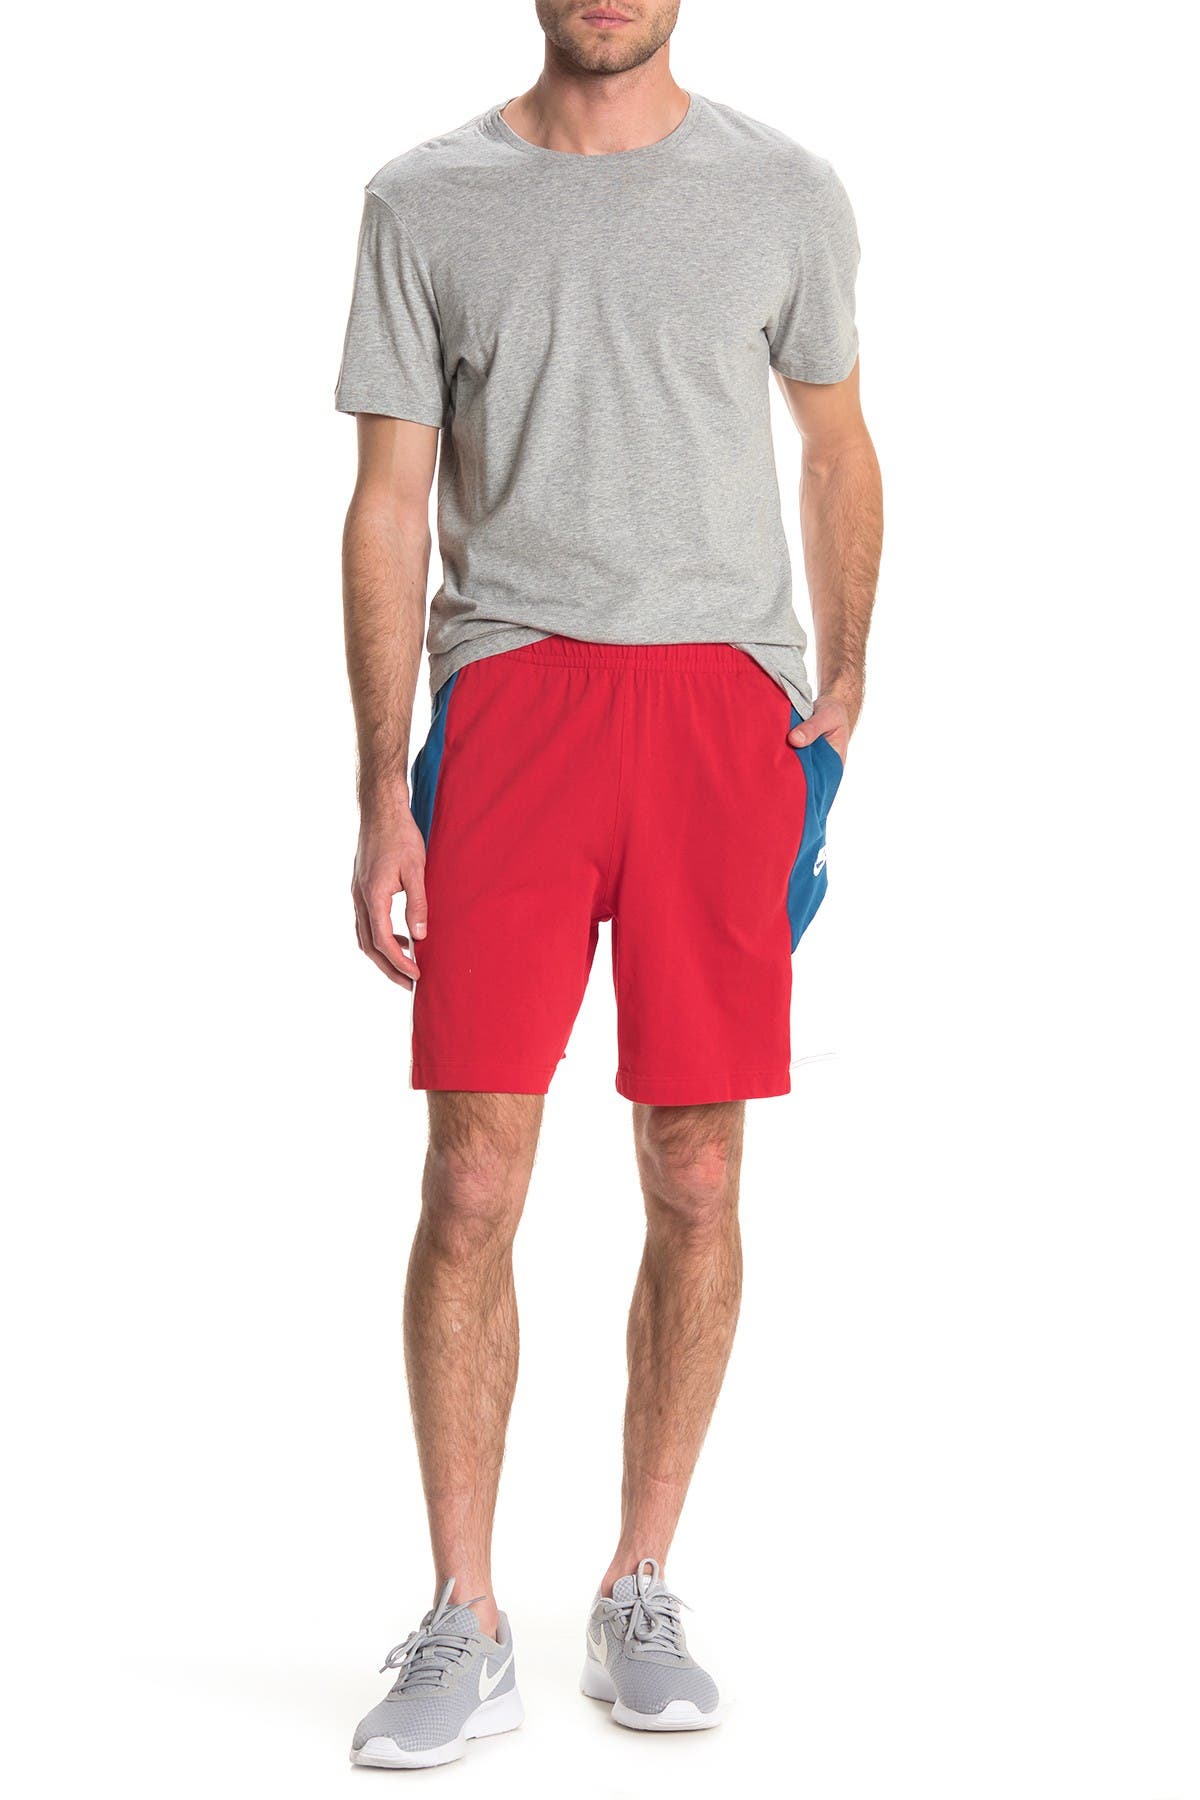 nike colorblock shorts